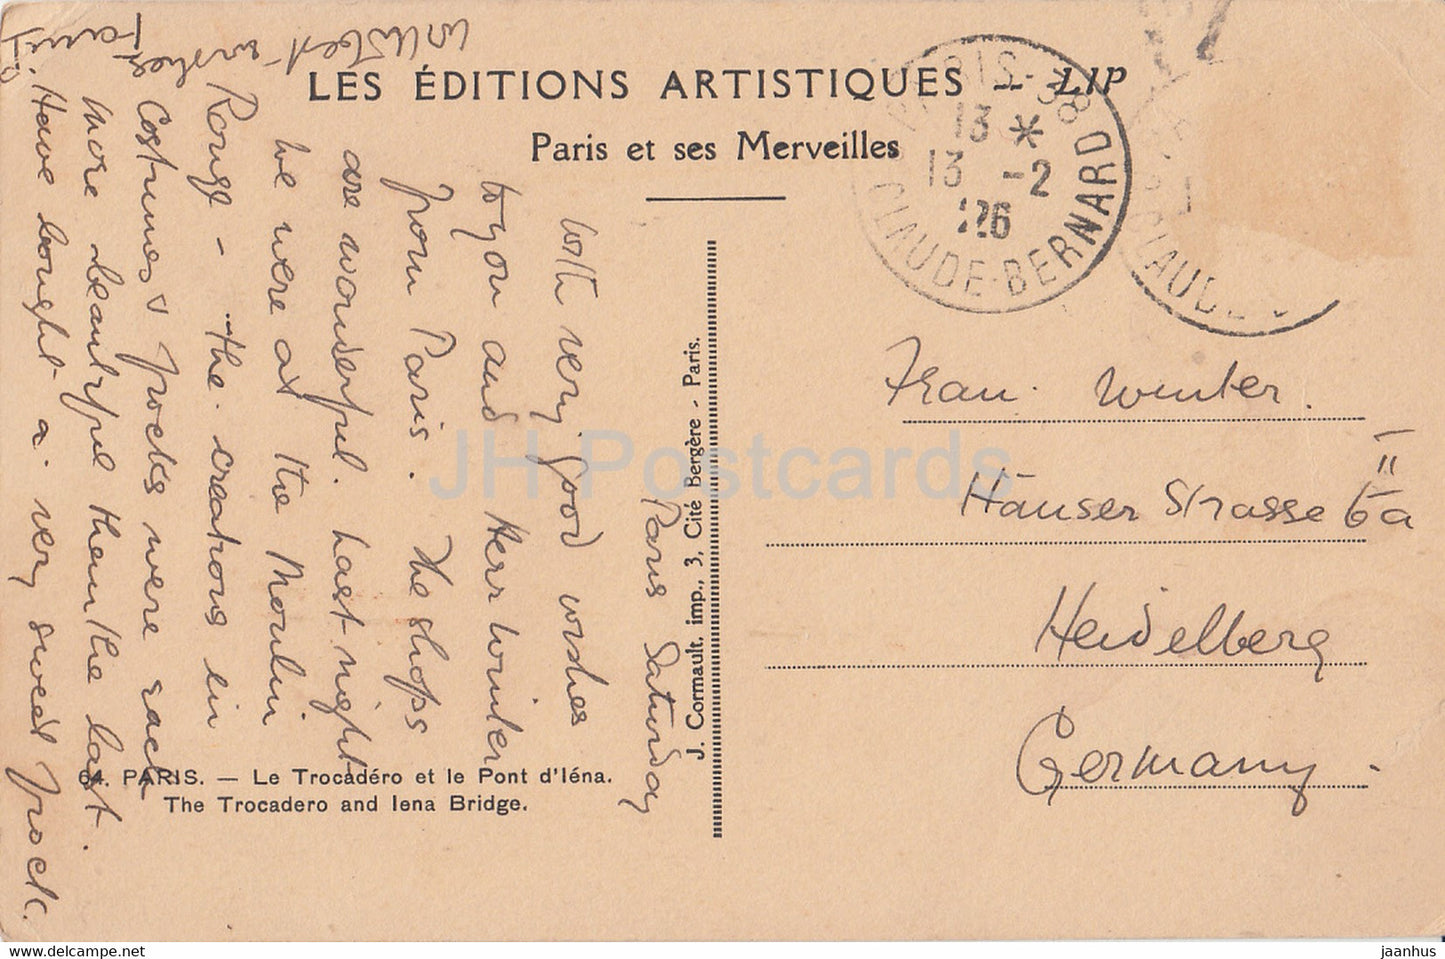 Paris - Le Trocadero et le Pont d'Iena - Die Trocadero- und Iena-Brücke - Auto - 64 - alte Postkarte - 1926 - Frankreich - gebraucht